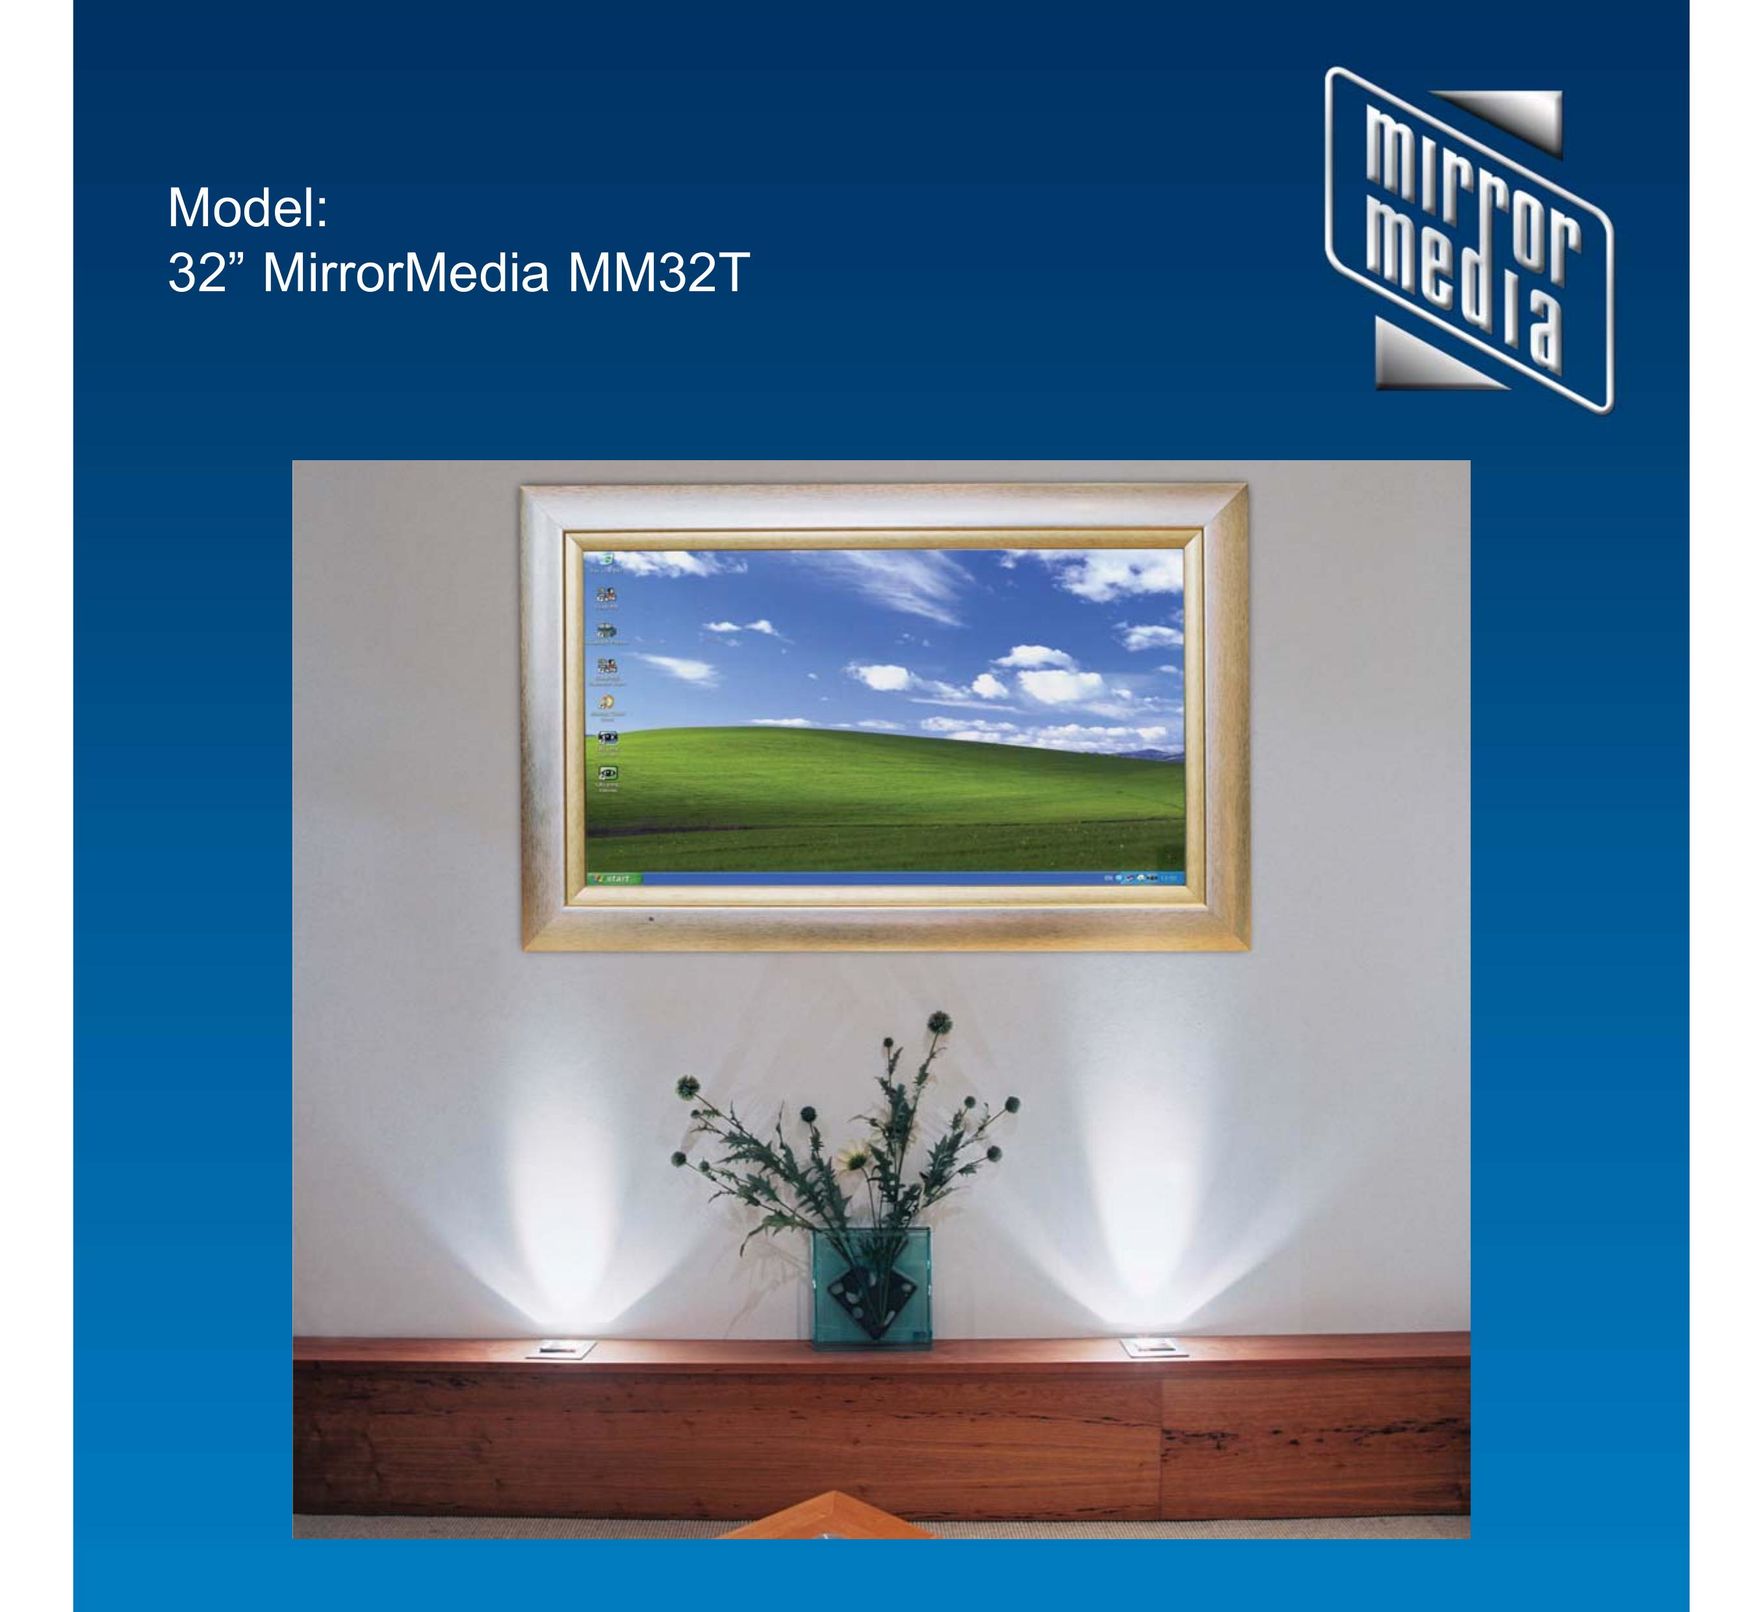 Mirror Media MM32T Flat Panel Television User Manual